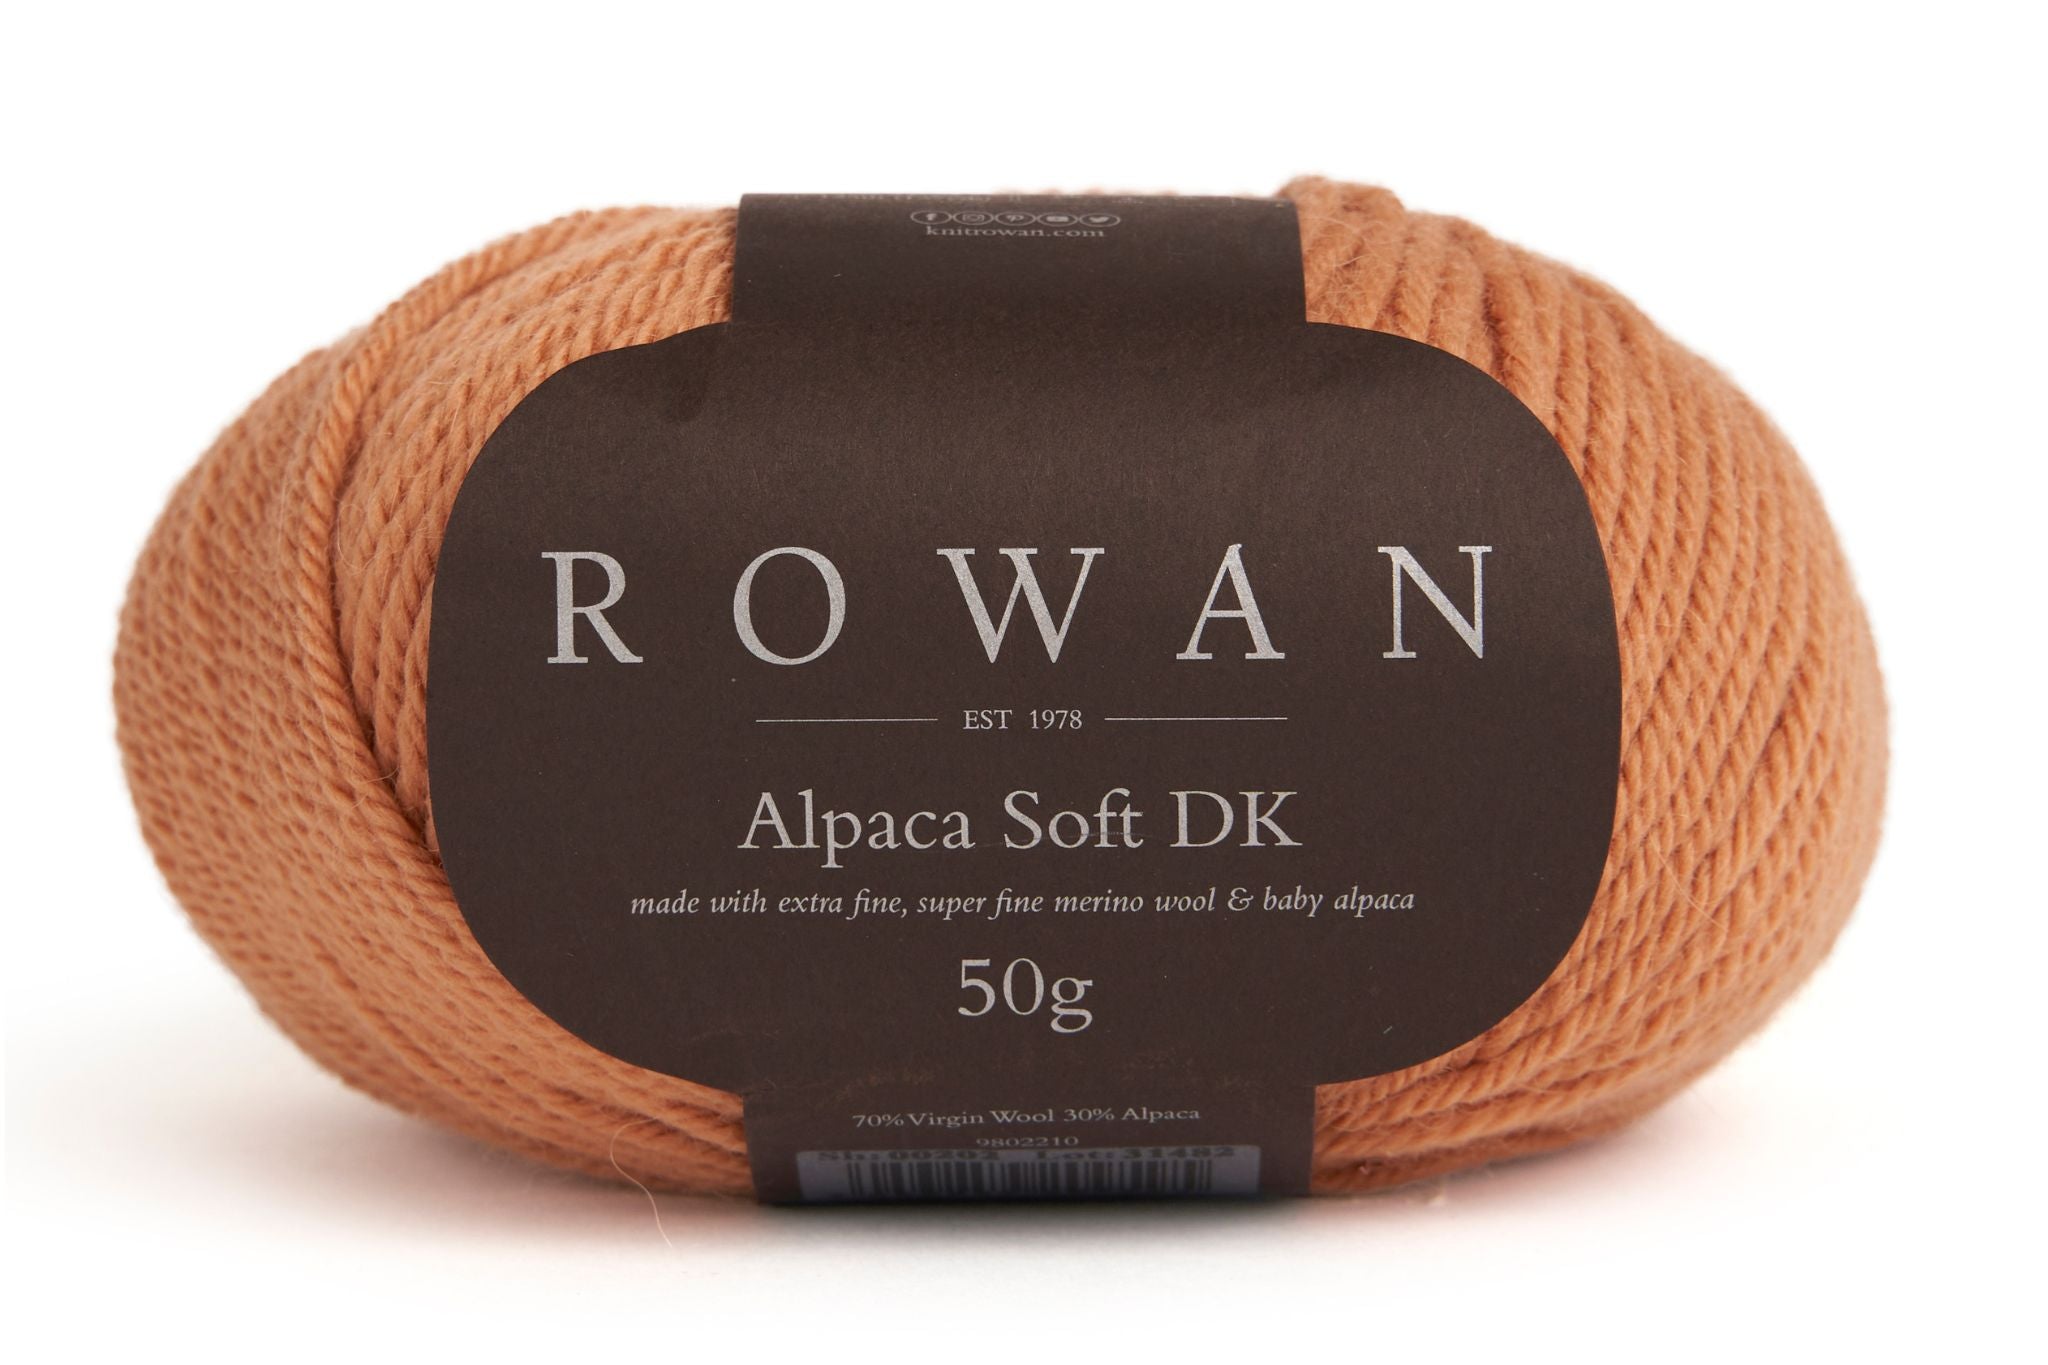 Rowan Alpaca Soft DK in Cinnamon-228